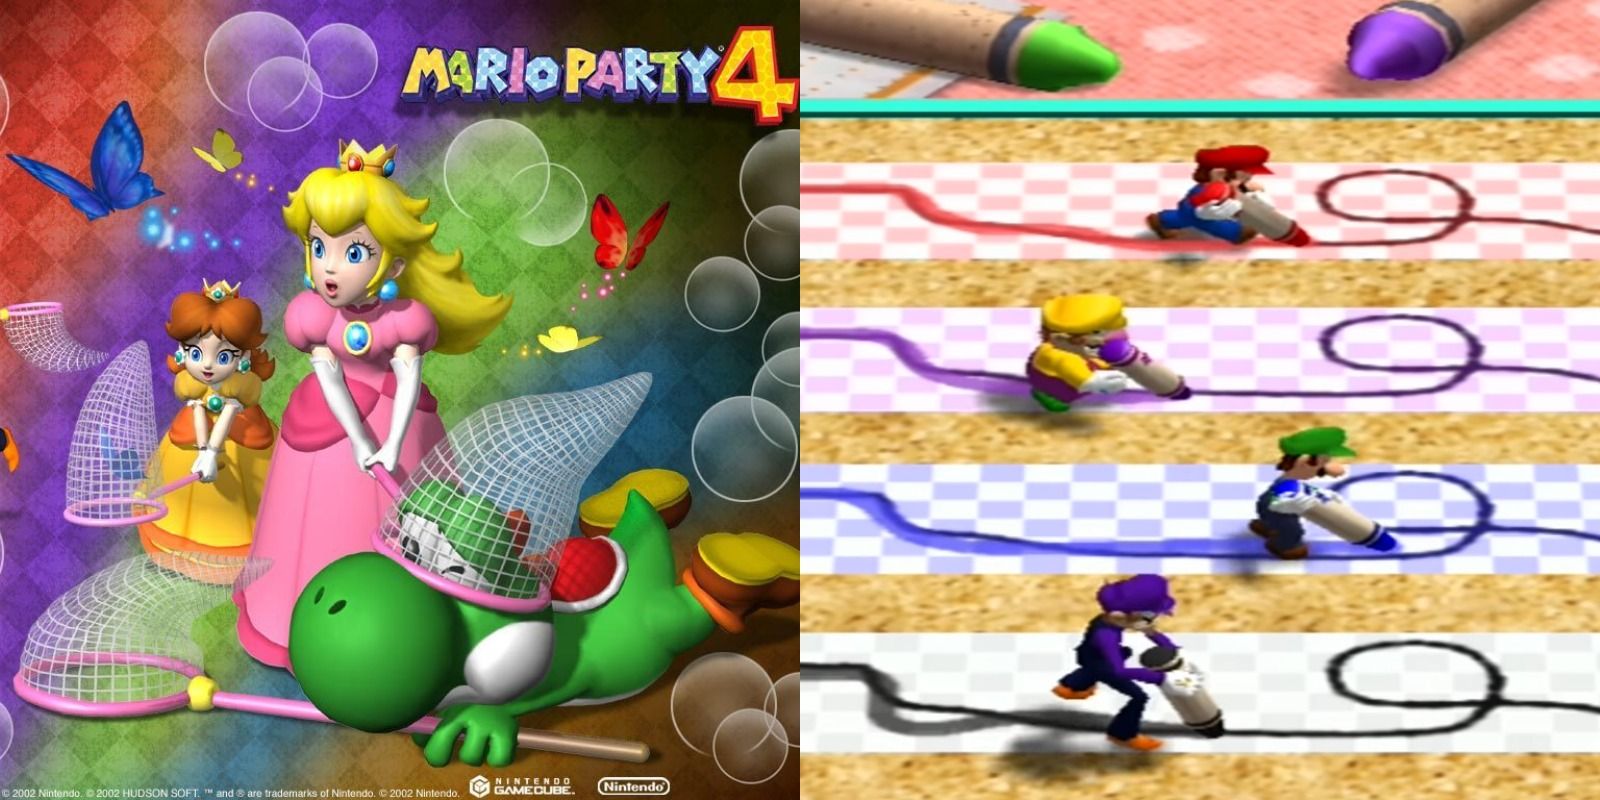 Mario Party 4 for the Nintendo GameCube